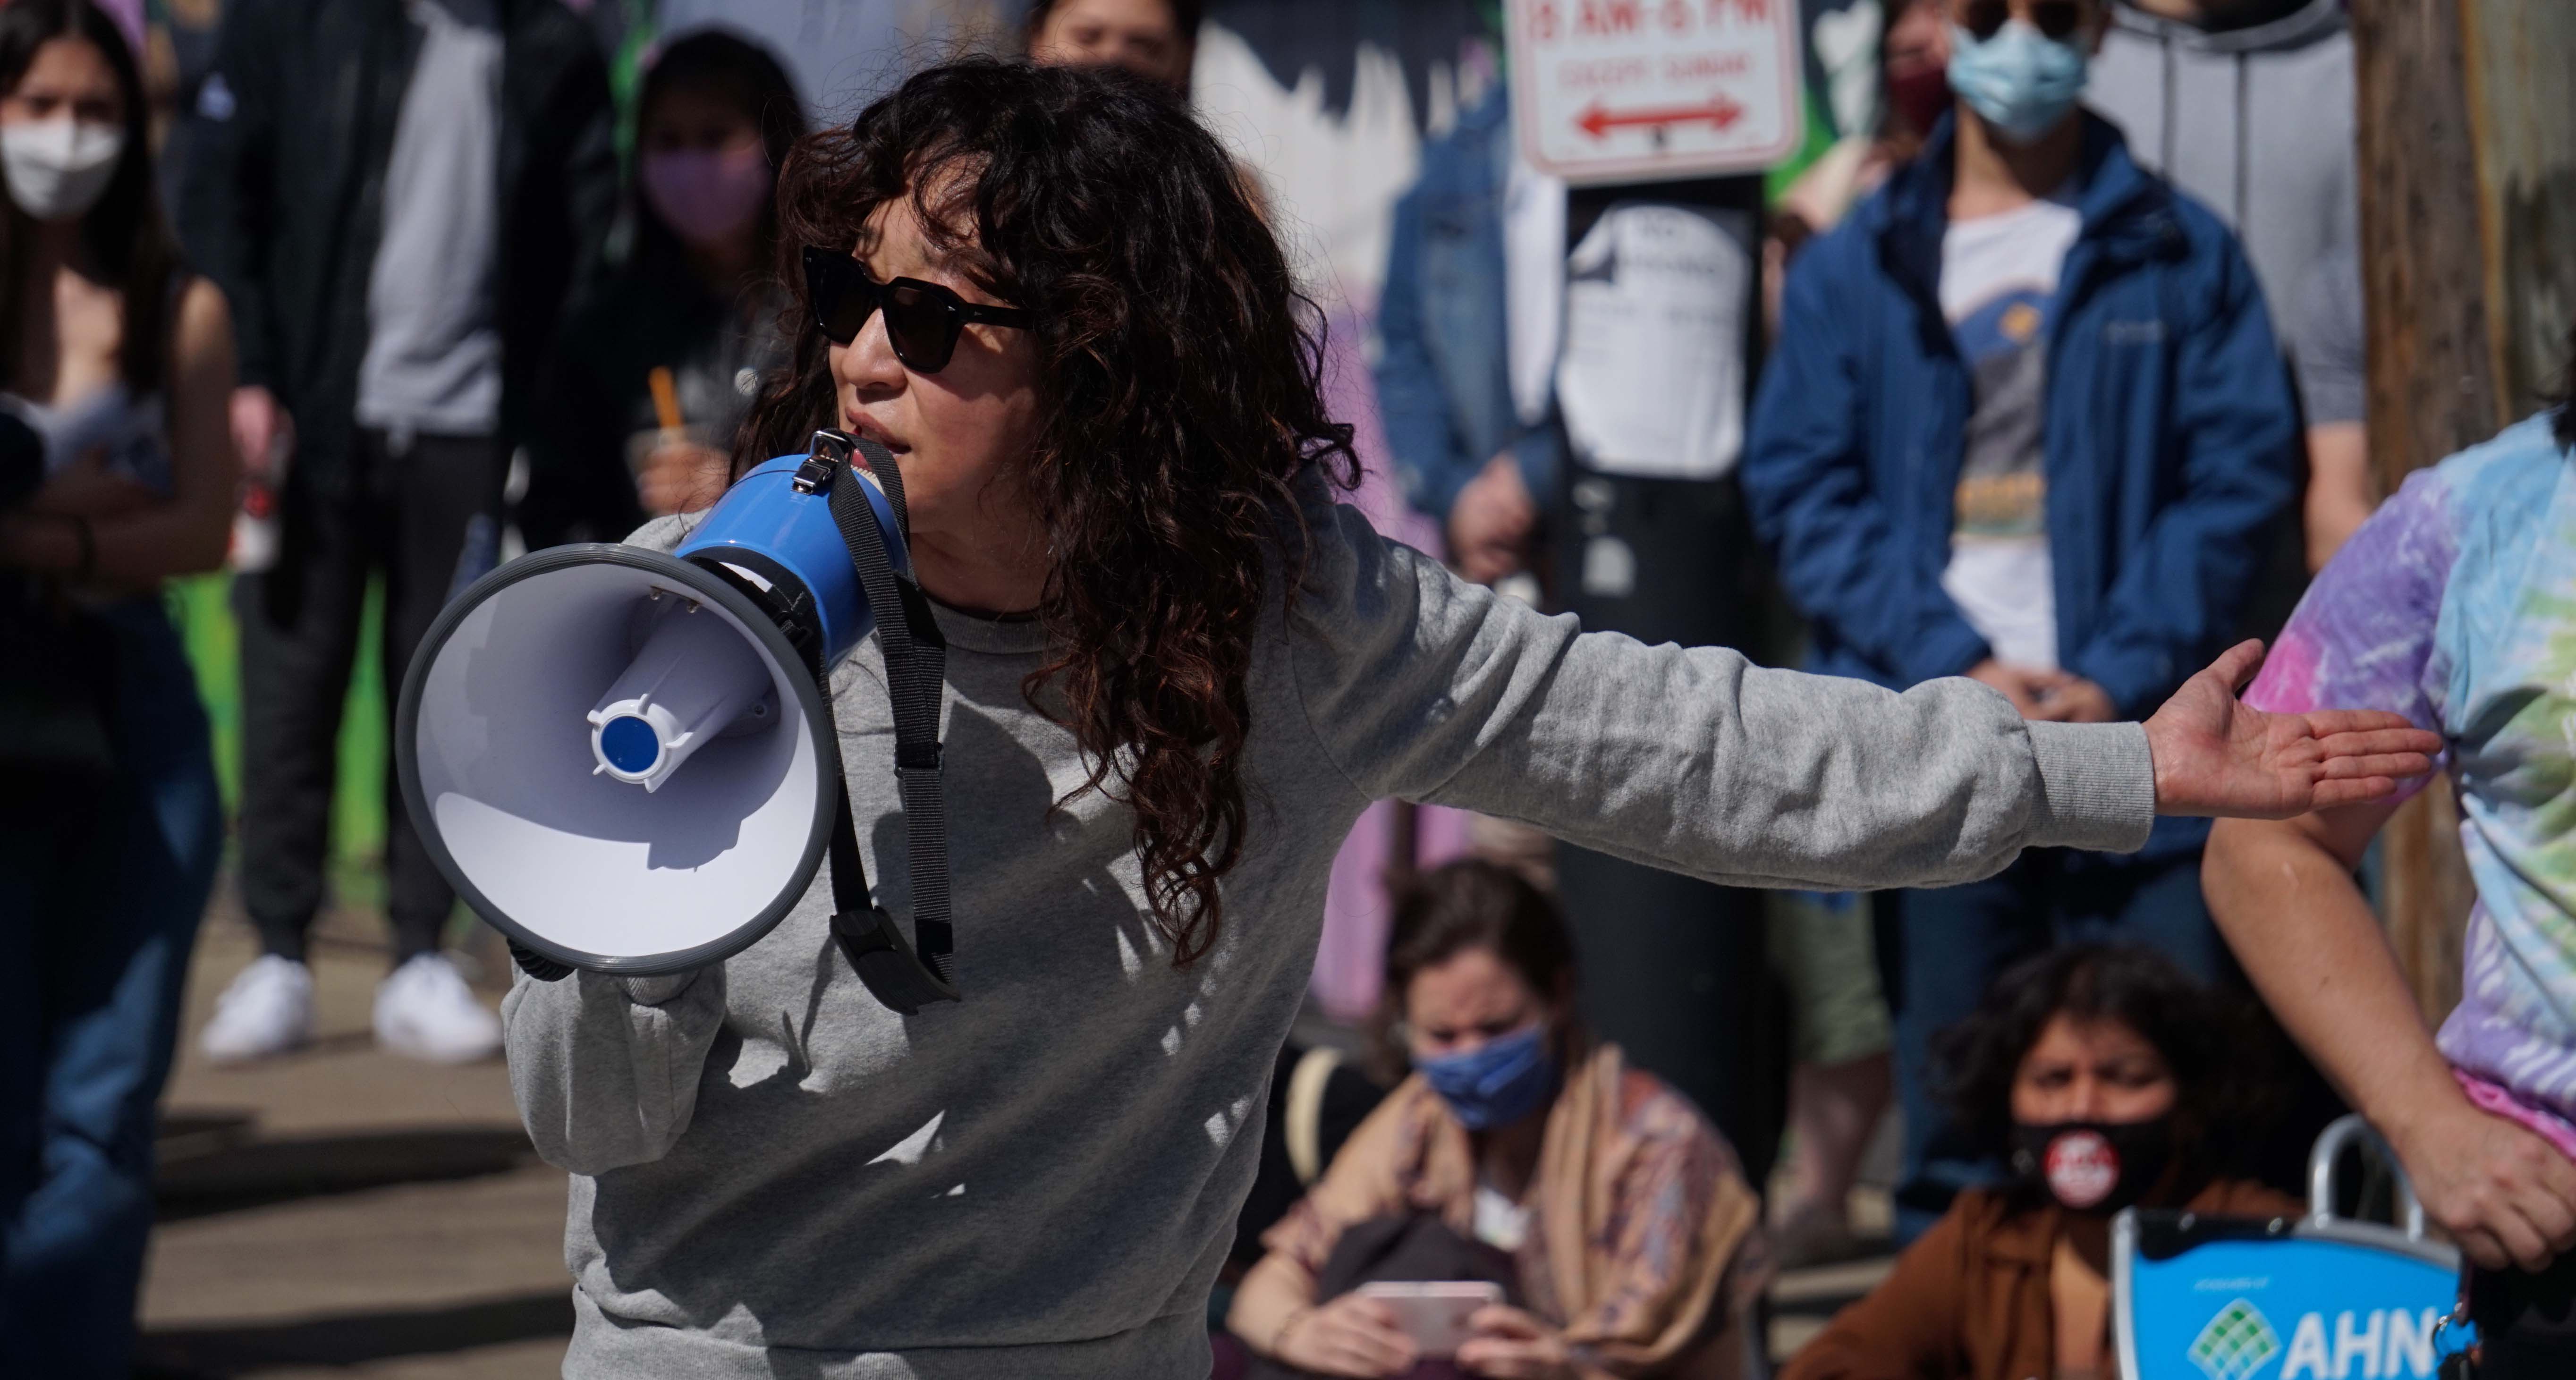 Woman addressing crowd with bullhorn